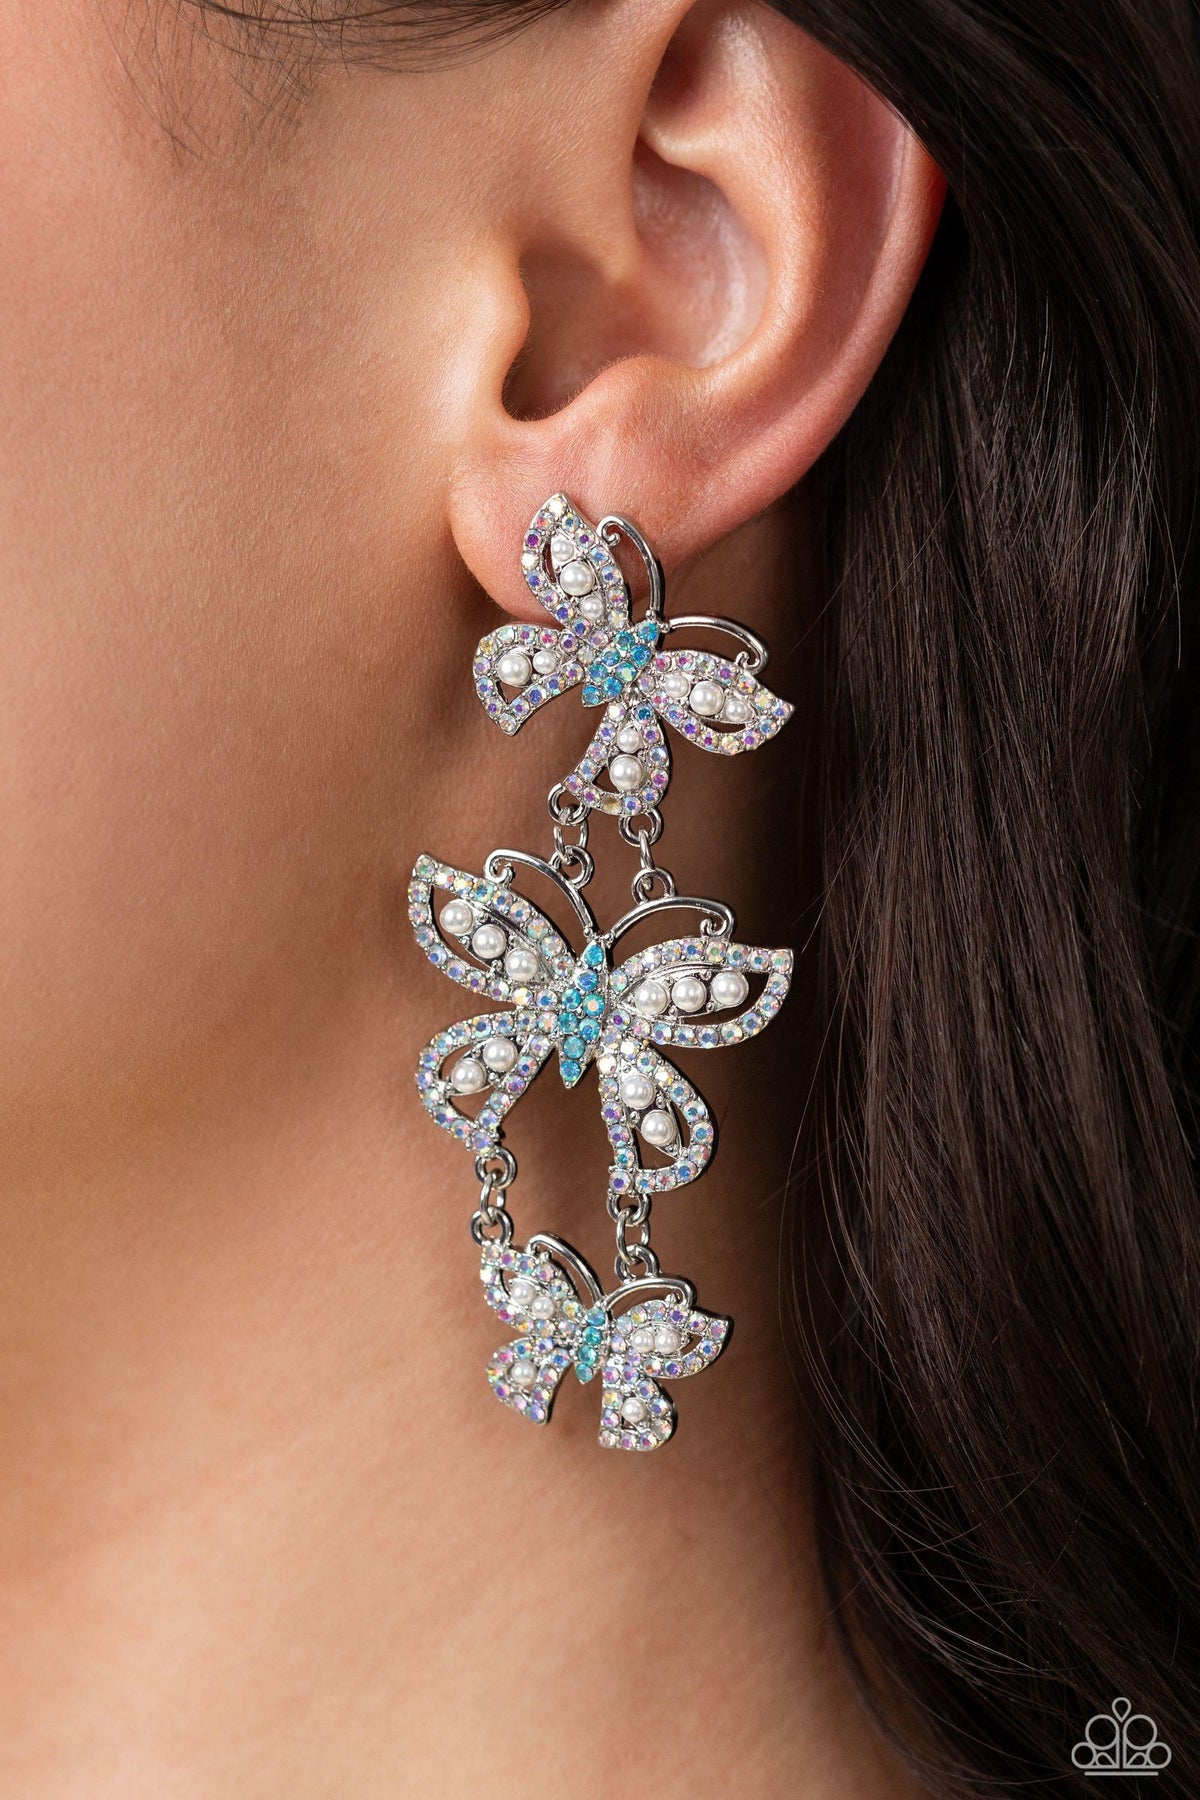 Fluttering Finale Multi Iridescent Rhinestone Butterfly Earrings - Paparazzi Accessories-on model - CarasShop.com - $5 Jewelry by Cara Jewels